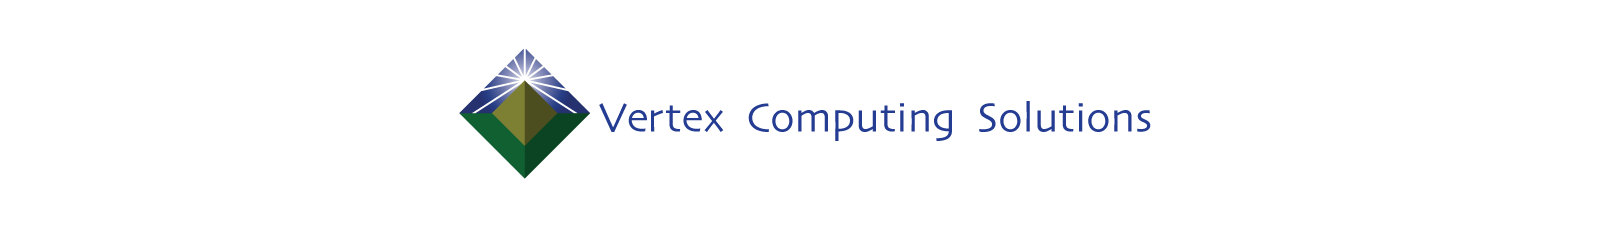 Vertex Computing logo